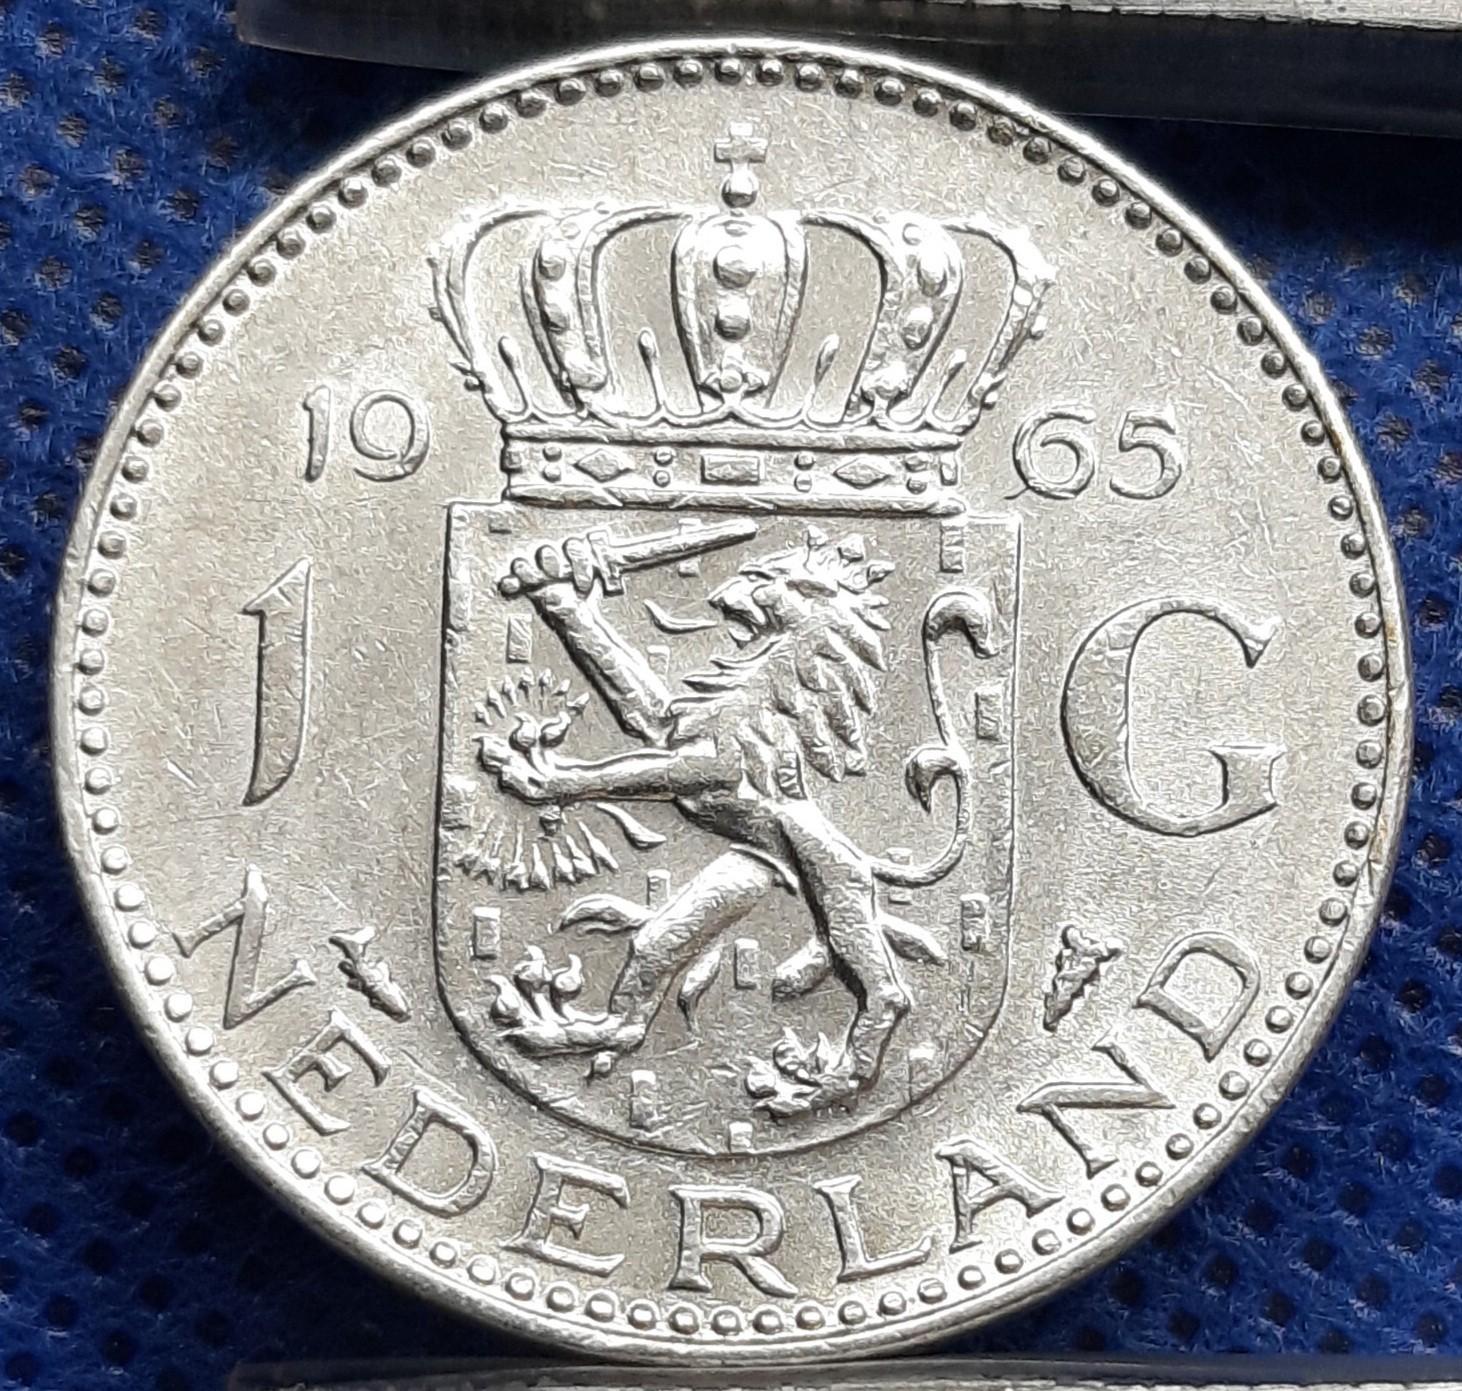 Nyderlandai 1 Guldenas 1965 KM#184 Sidabras (422)